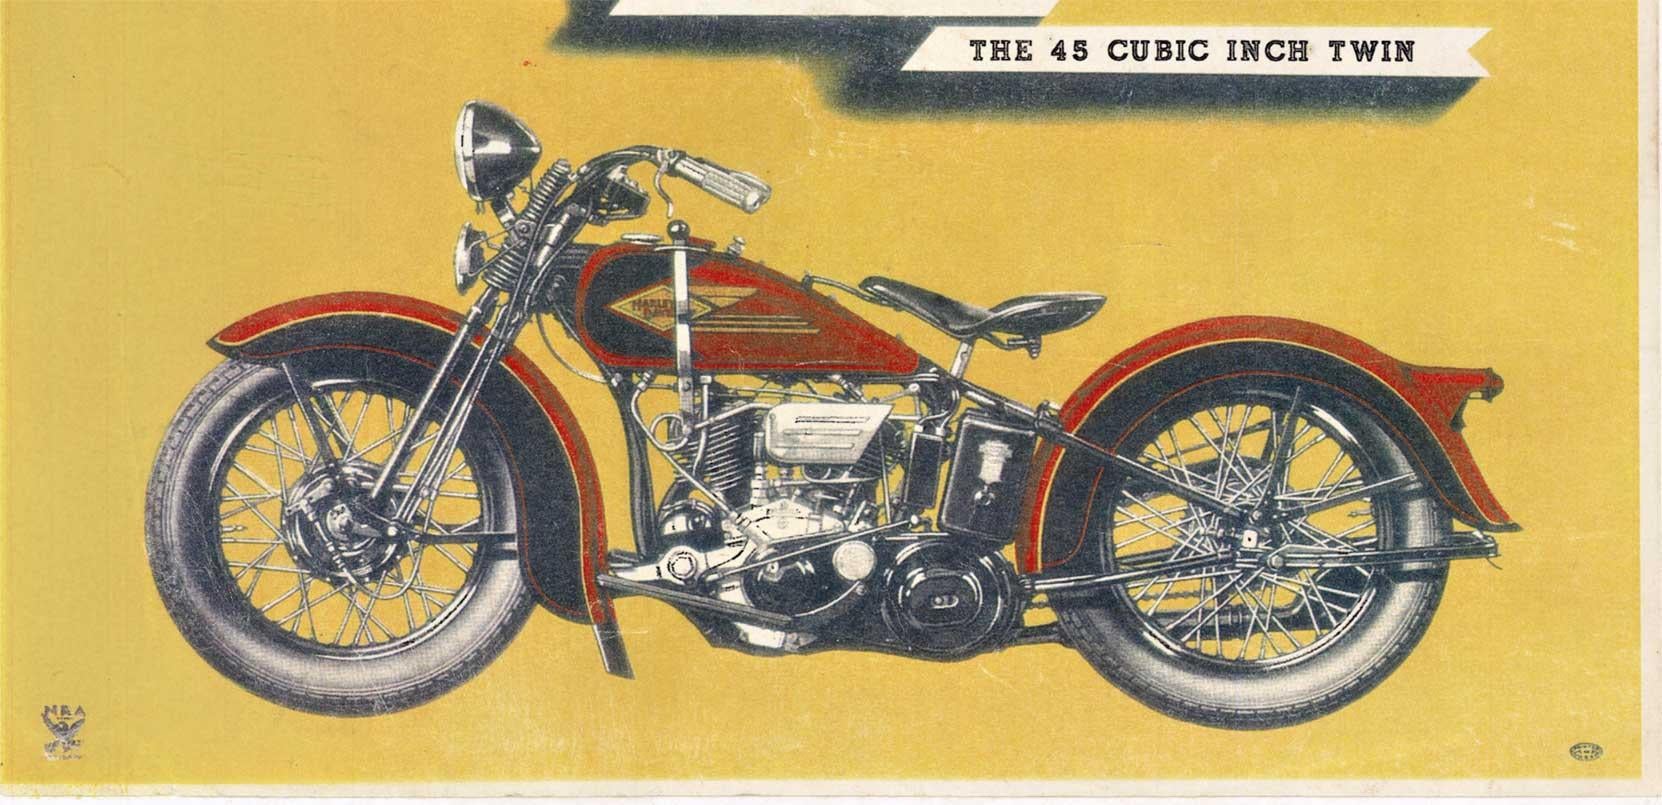 Original 1935 Harley Davidson Motorcycle art deco vintage poster - Print by Unknown